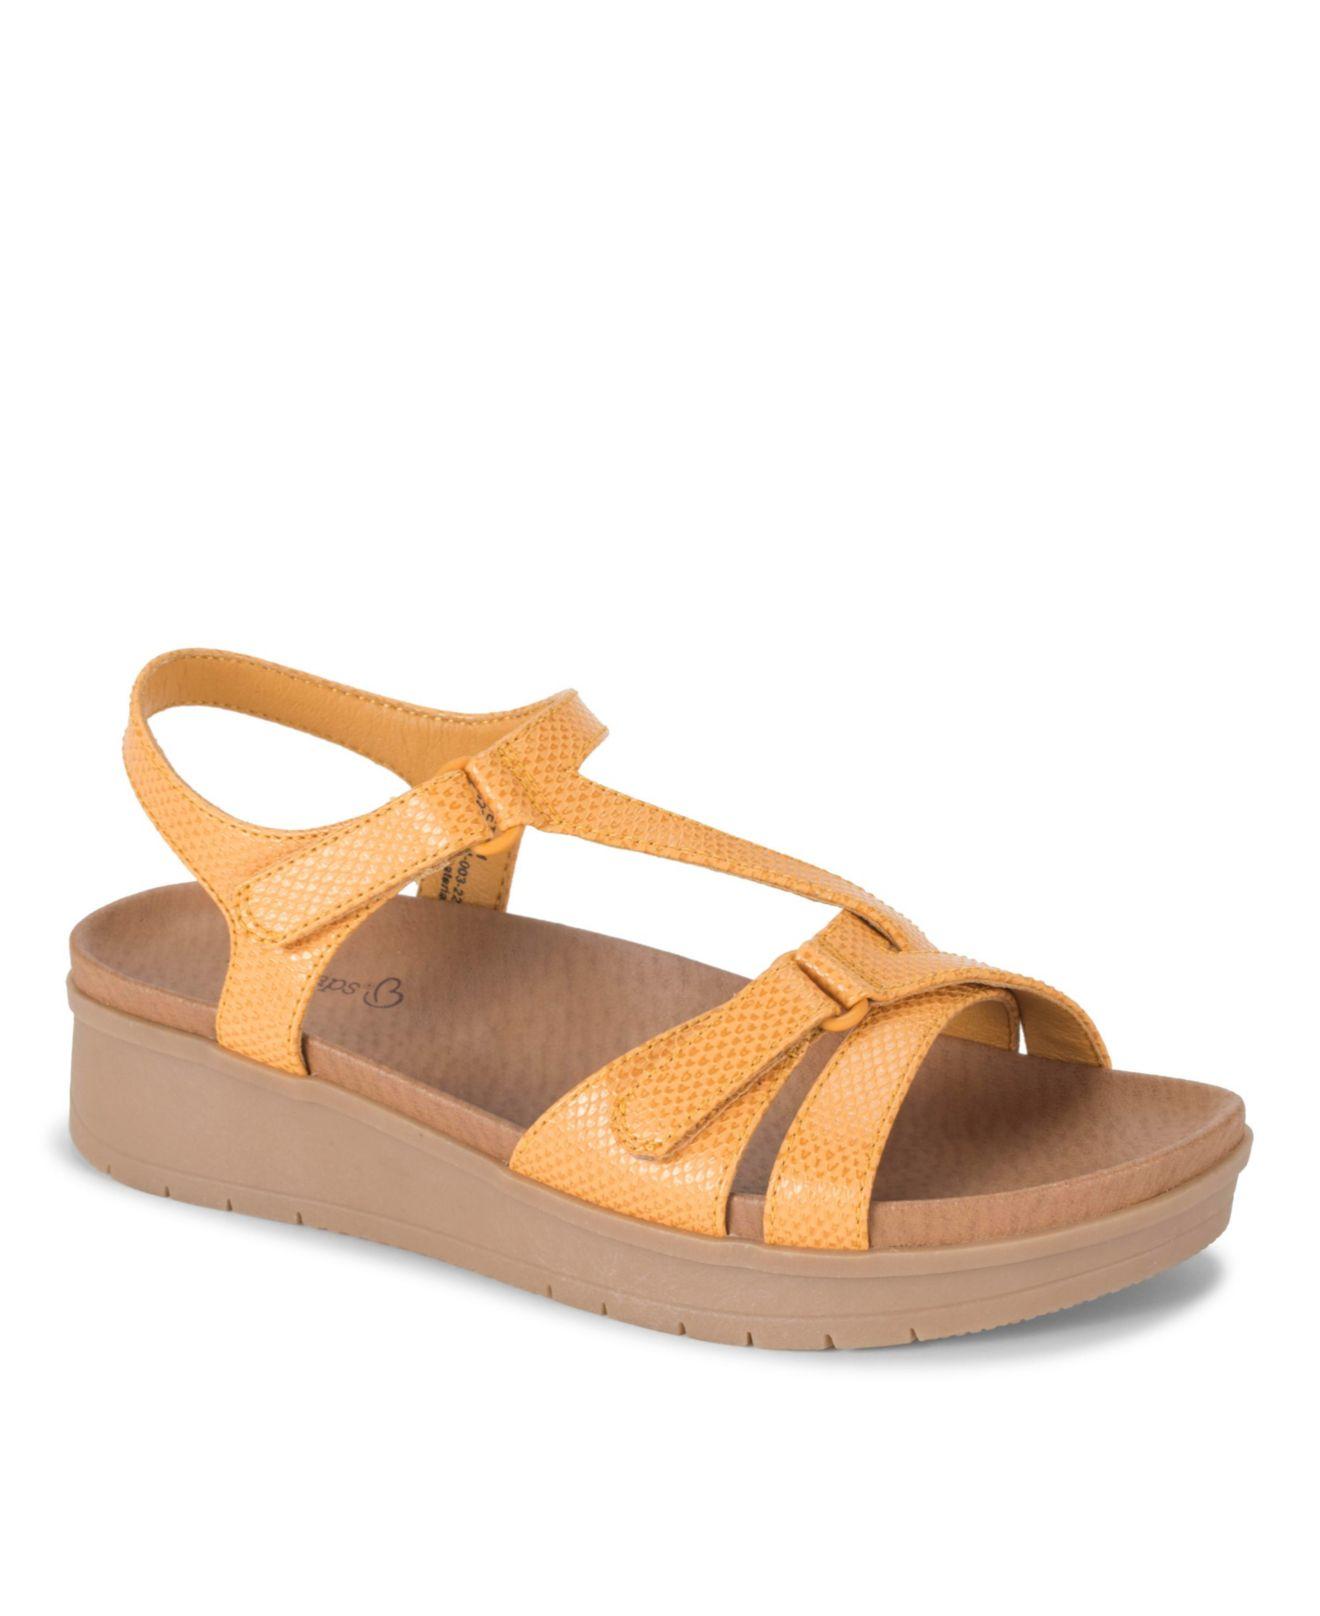 BareTraps Gidget Wedge Sandal in Brown | Lyst